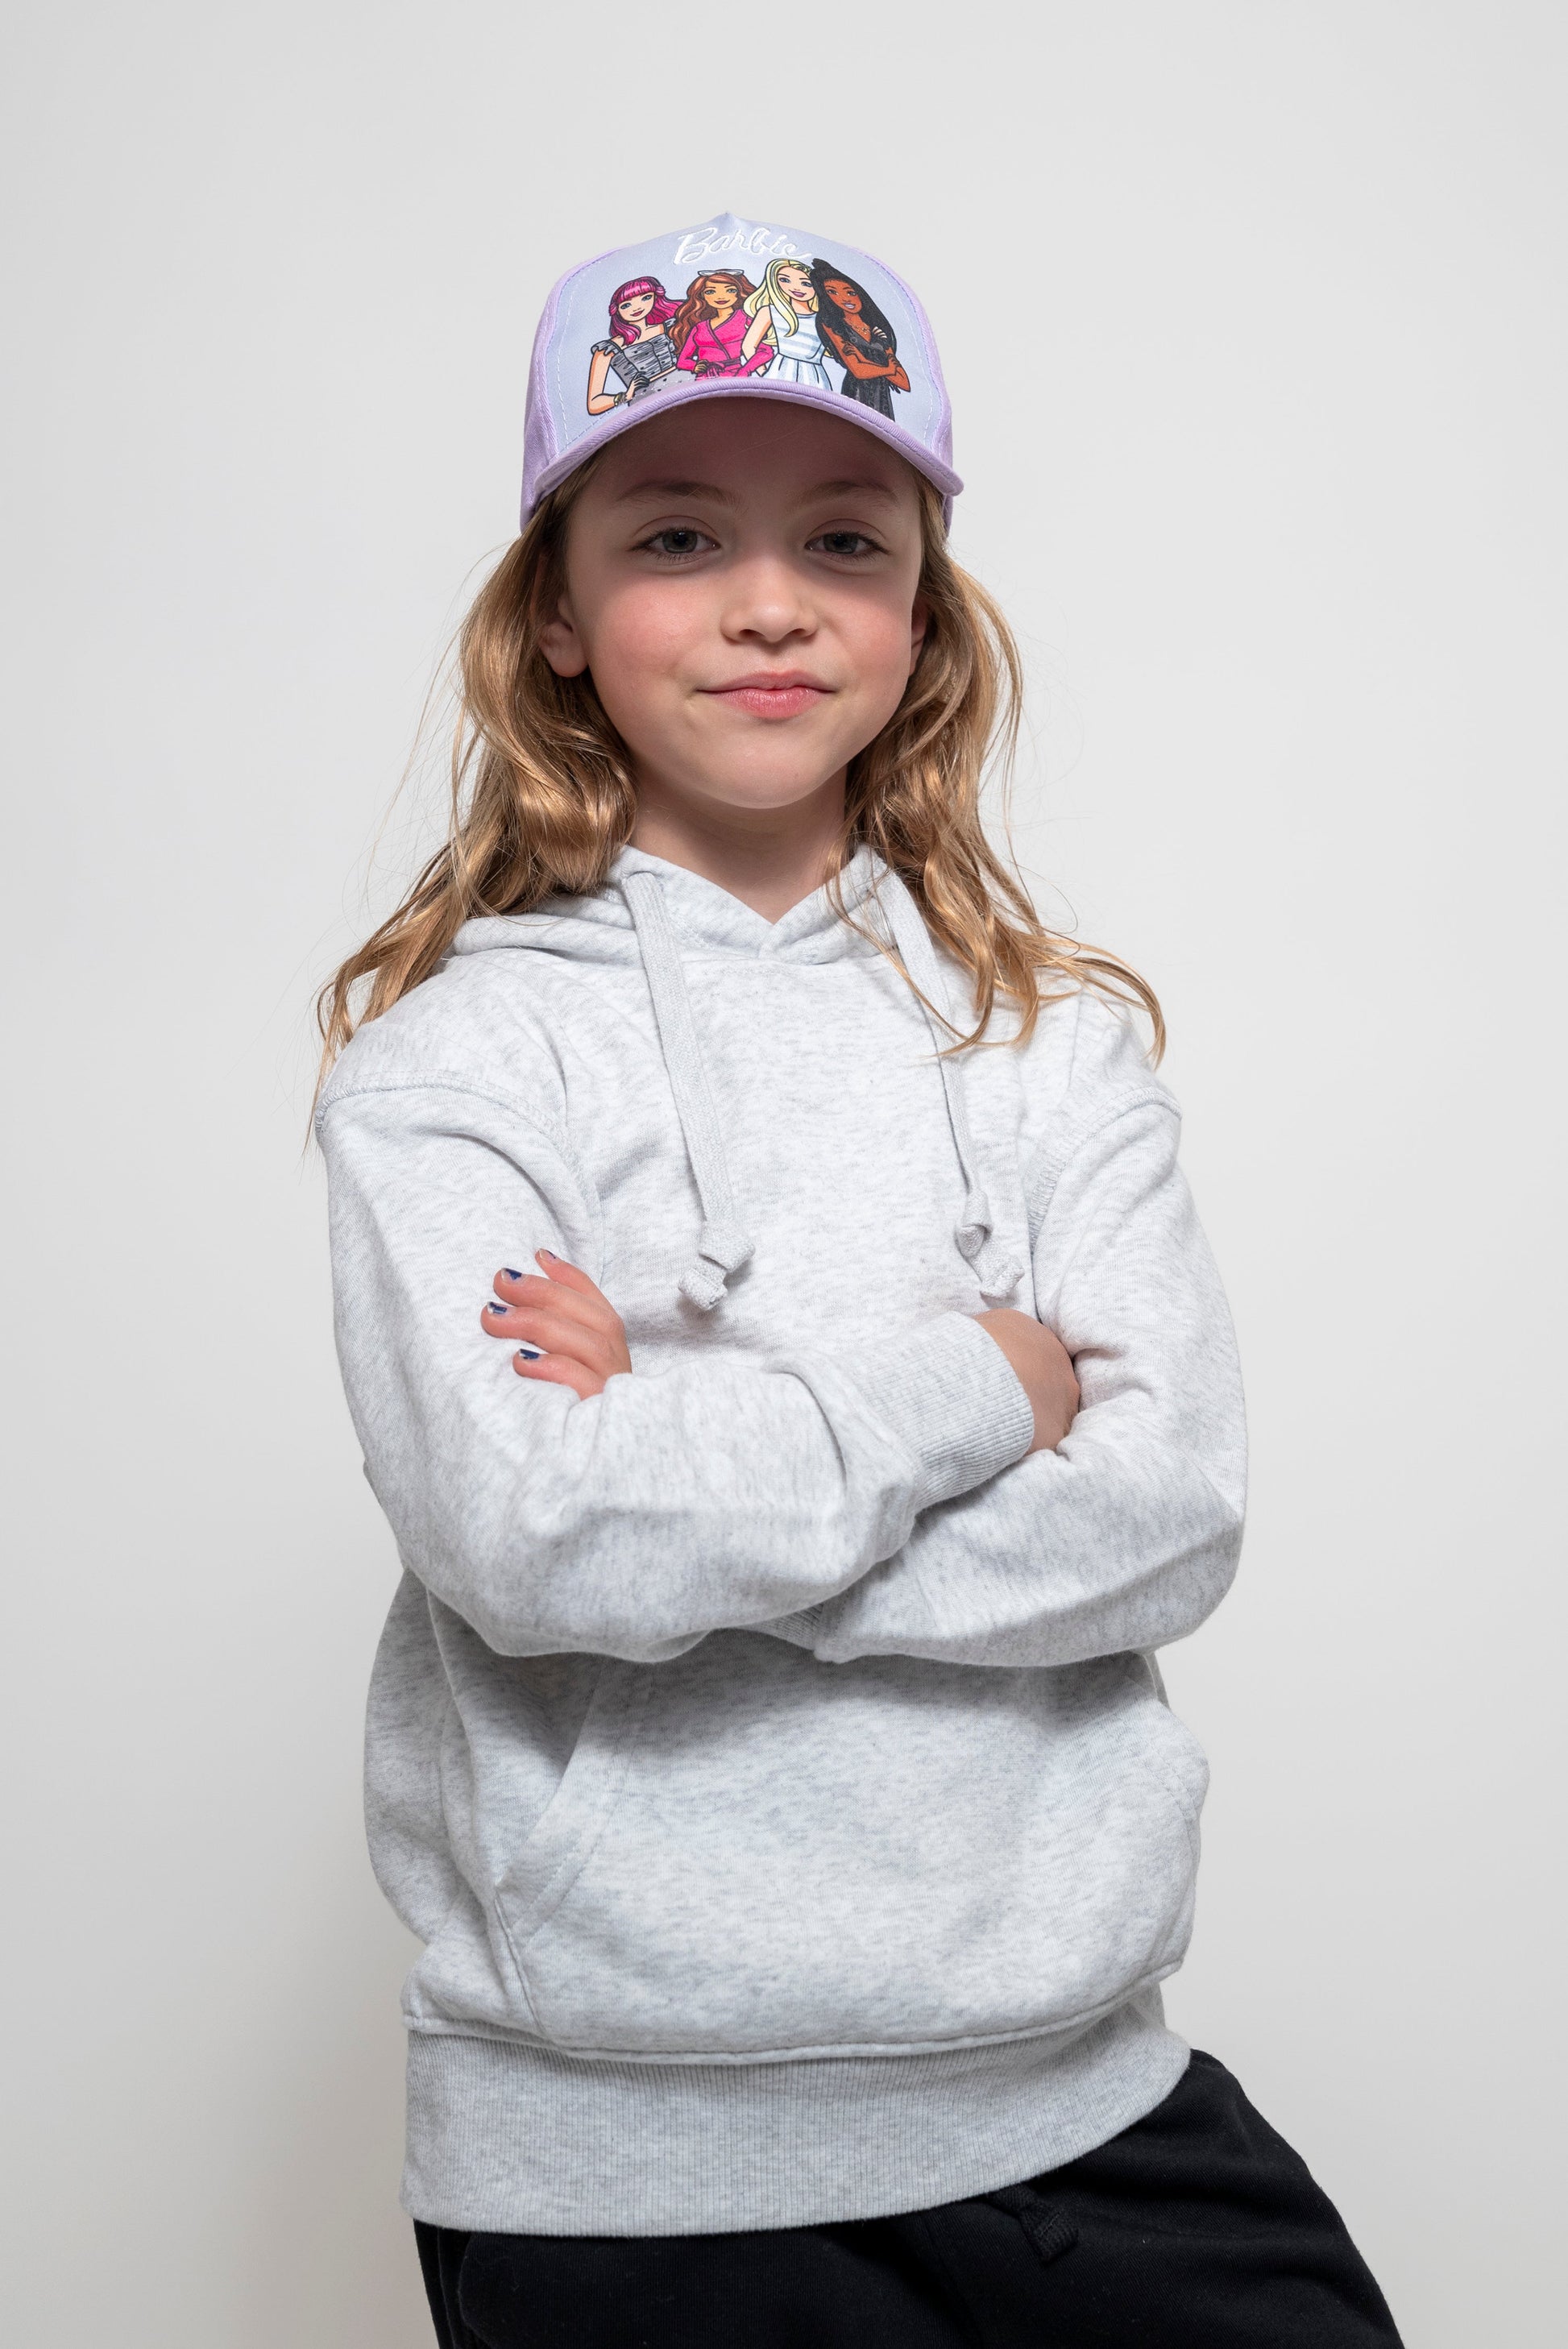 Gertex Barbie Youth Girls Baseball Cap Hat in Purple